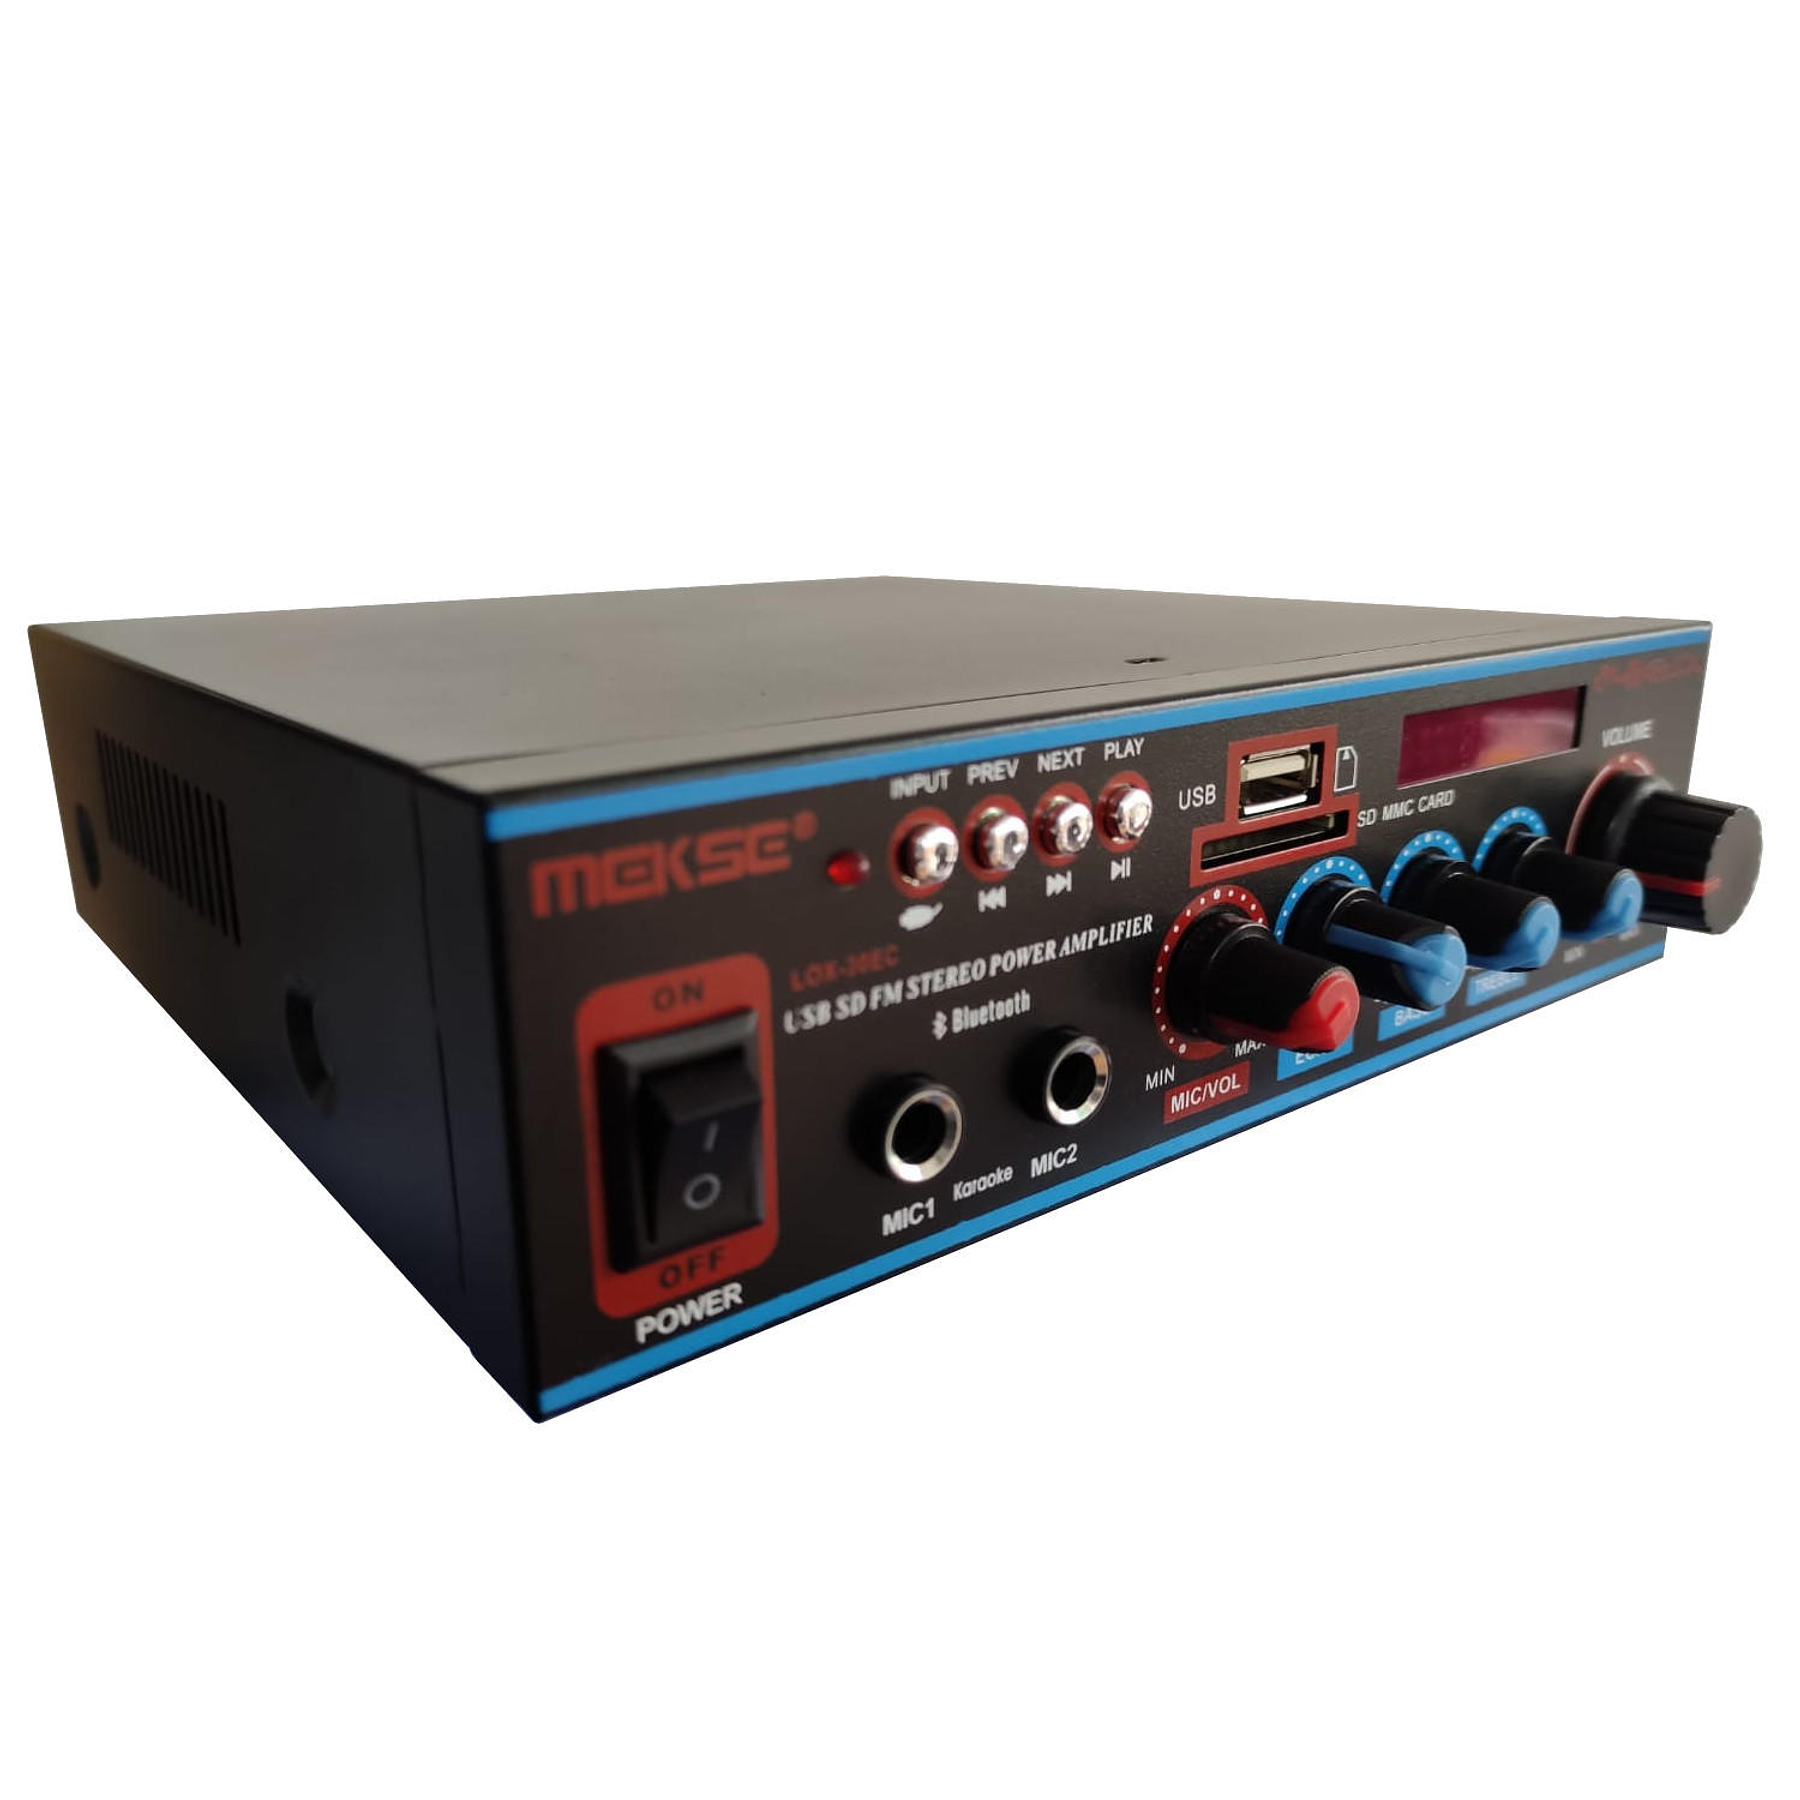 Amplificador de audio Mekse LOX-30EC